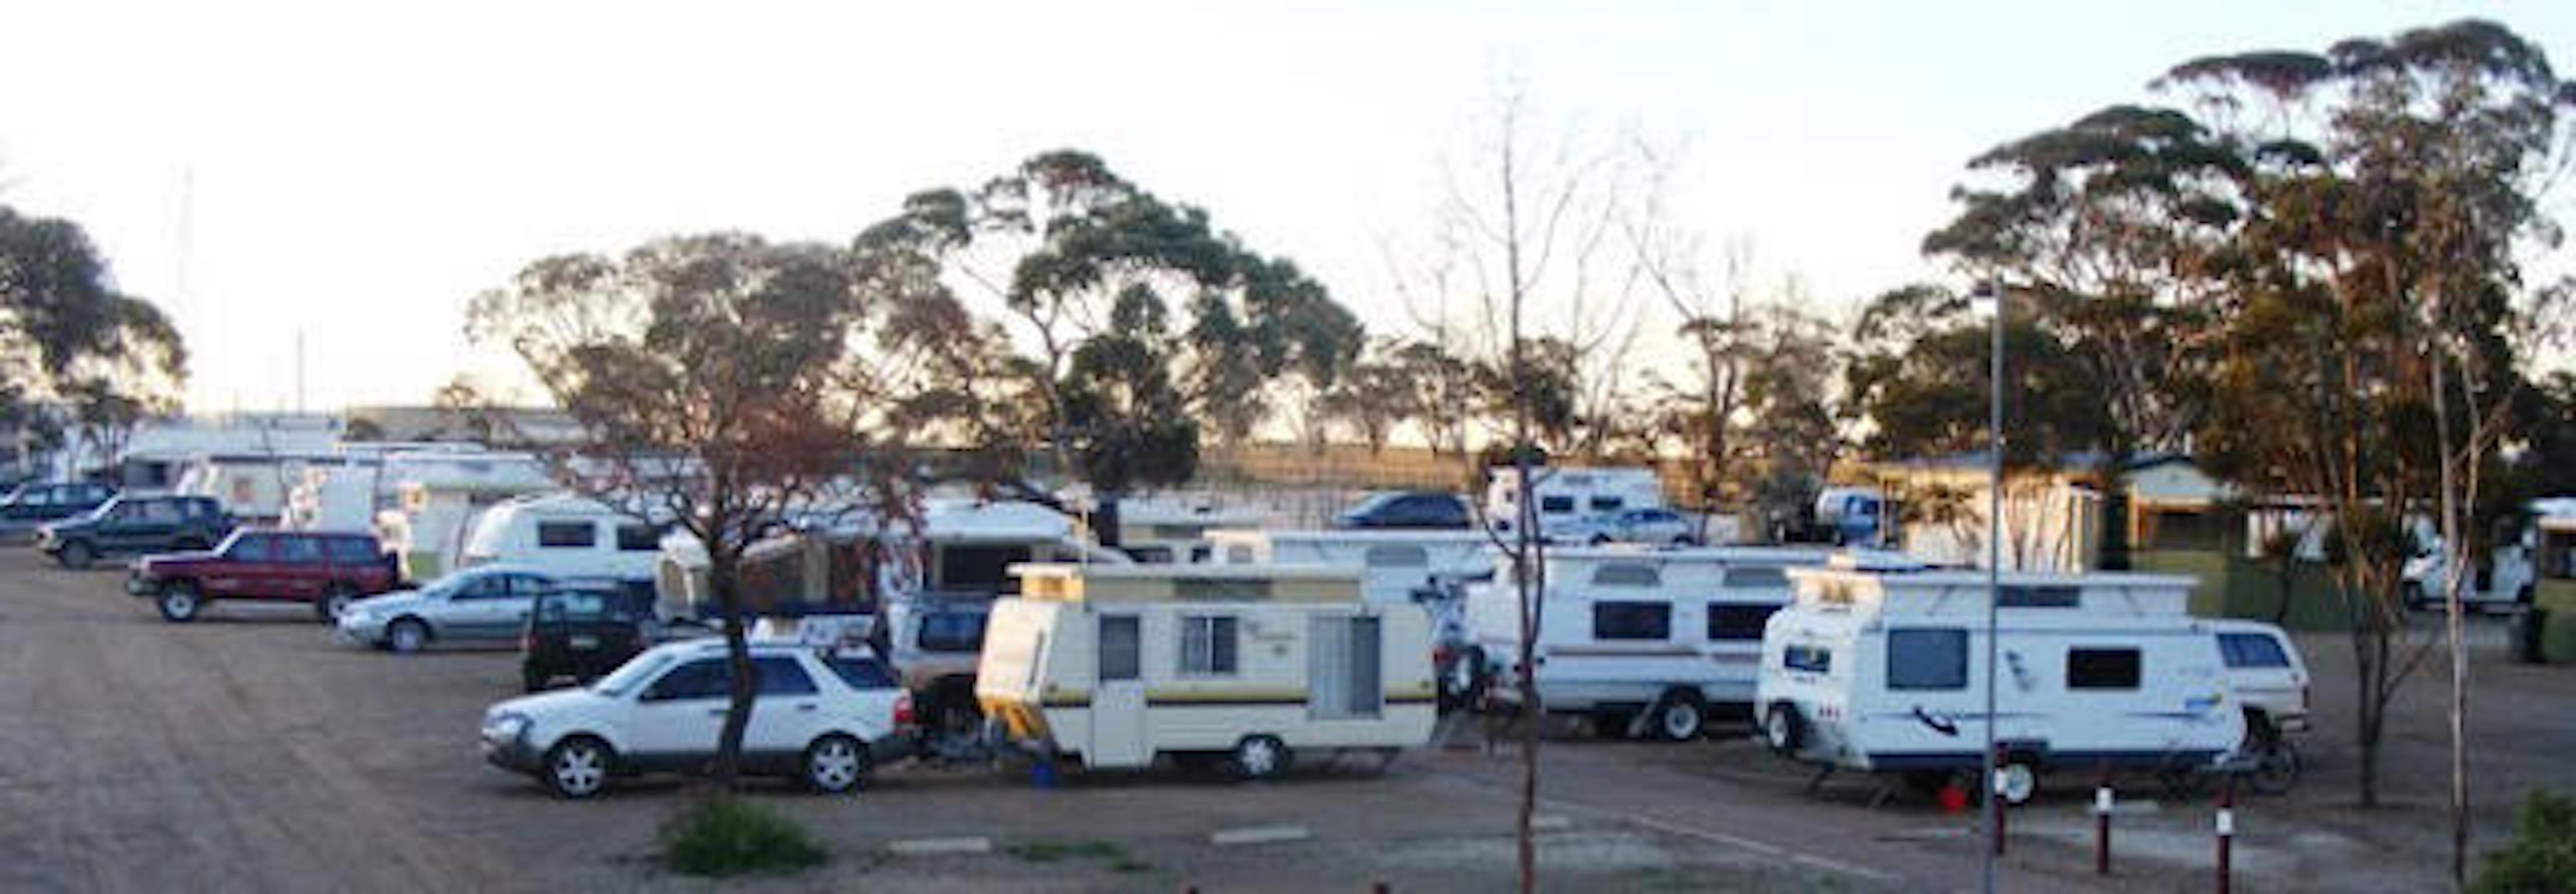 Woomera Traveller's Village and Caravan Park - Accommodation Mount Tamborine